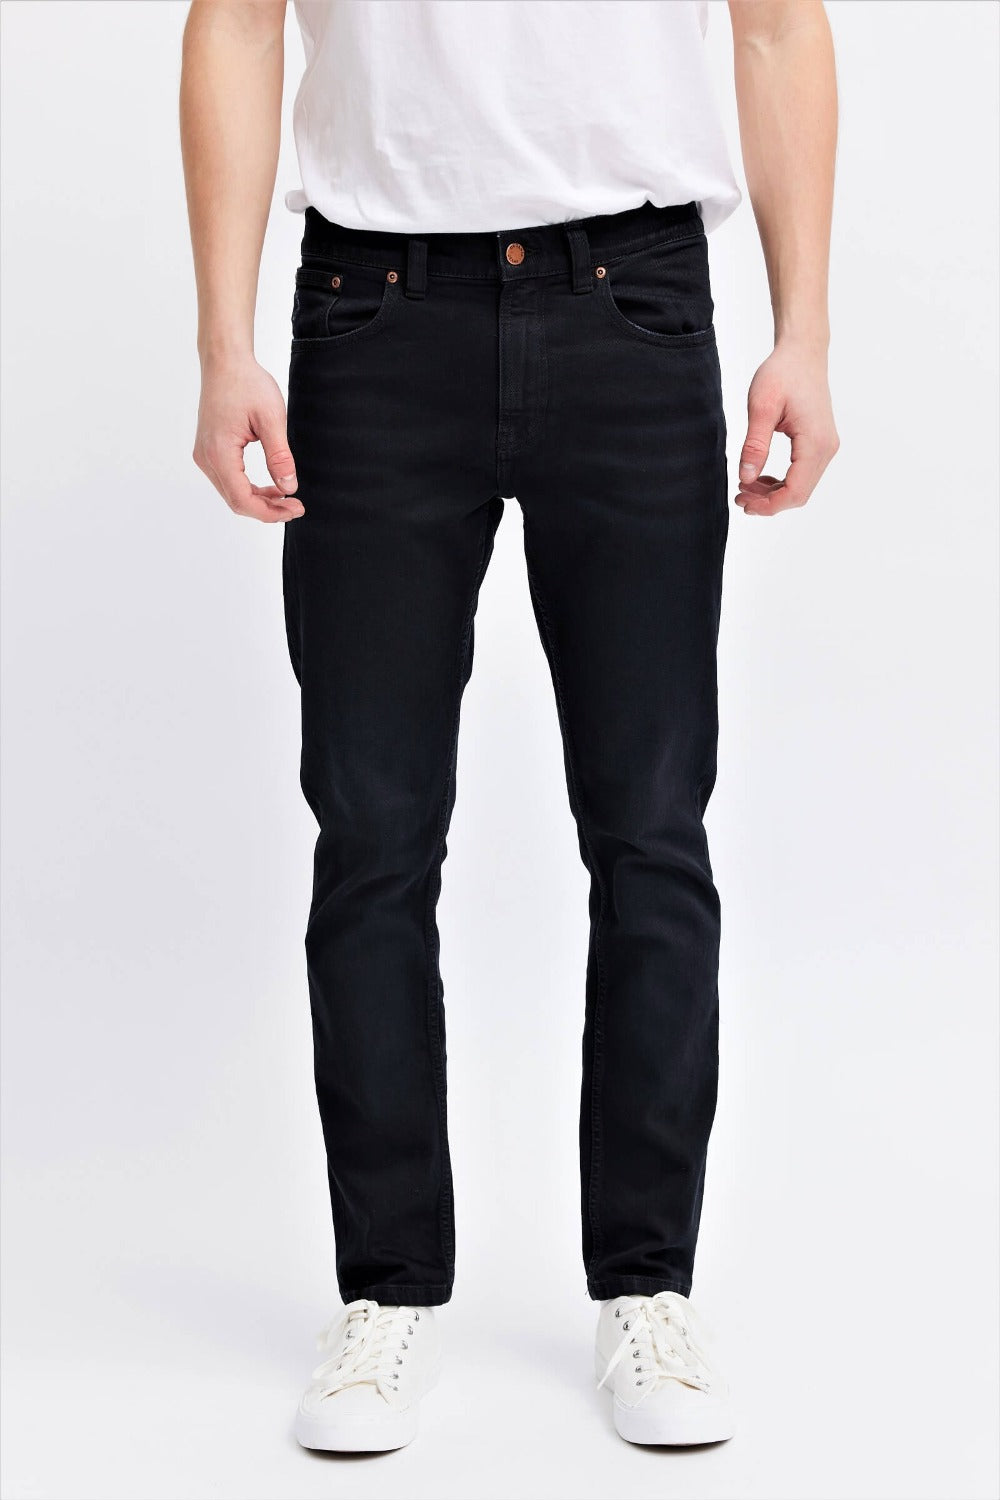 Sustainable Black Jeans - Men's Slim Fit